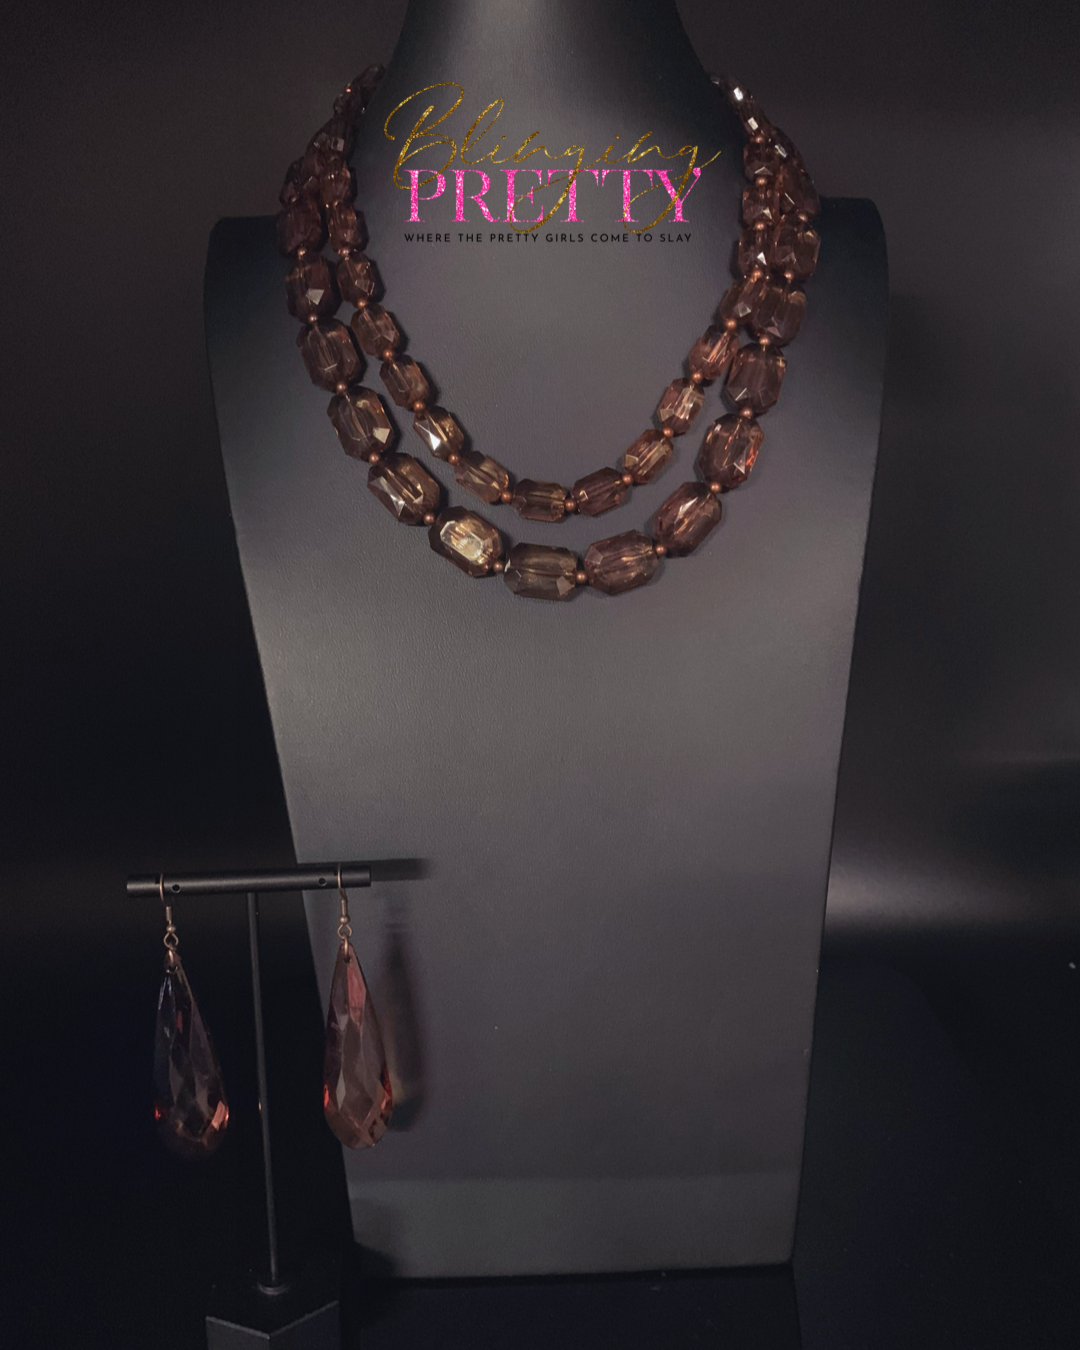 Paparazzi Earring & Necklace Set - Copper